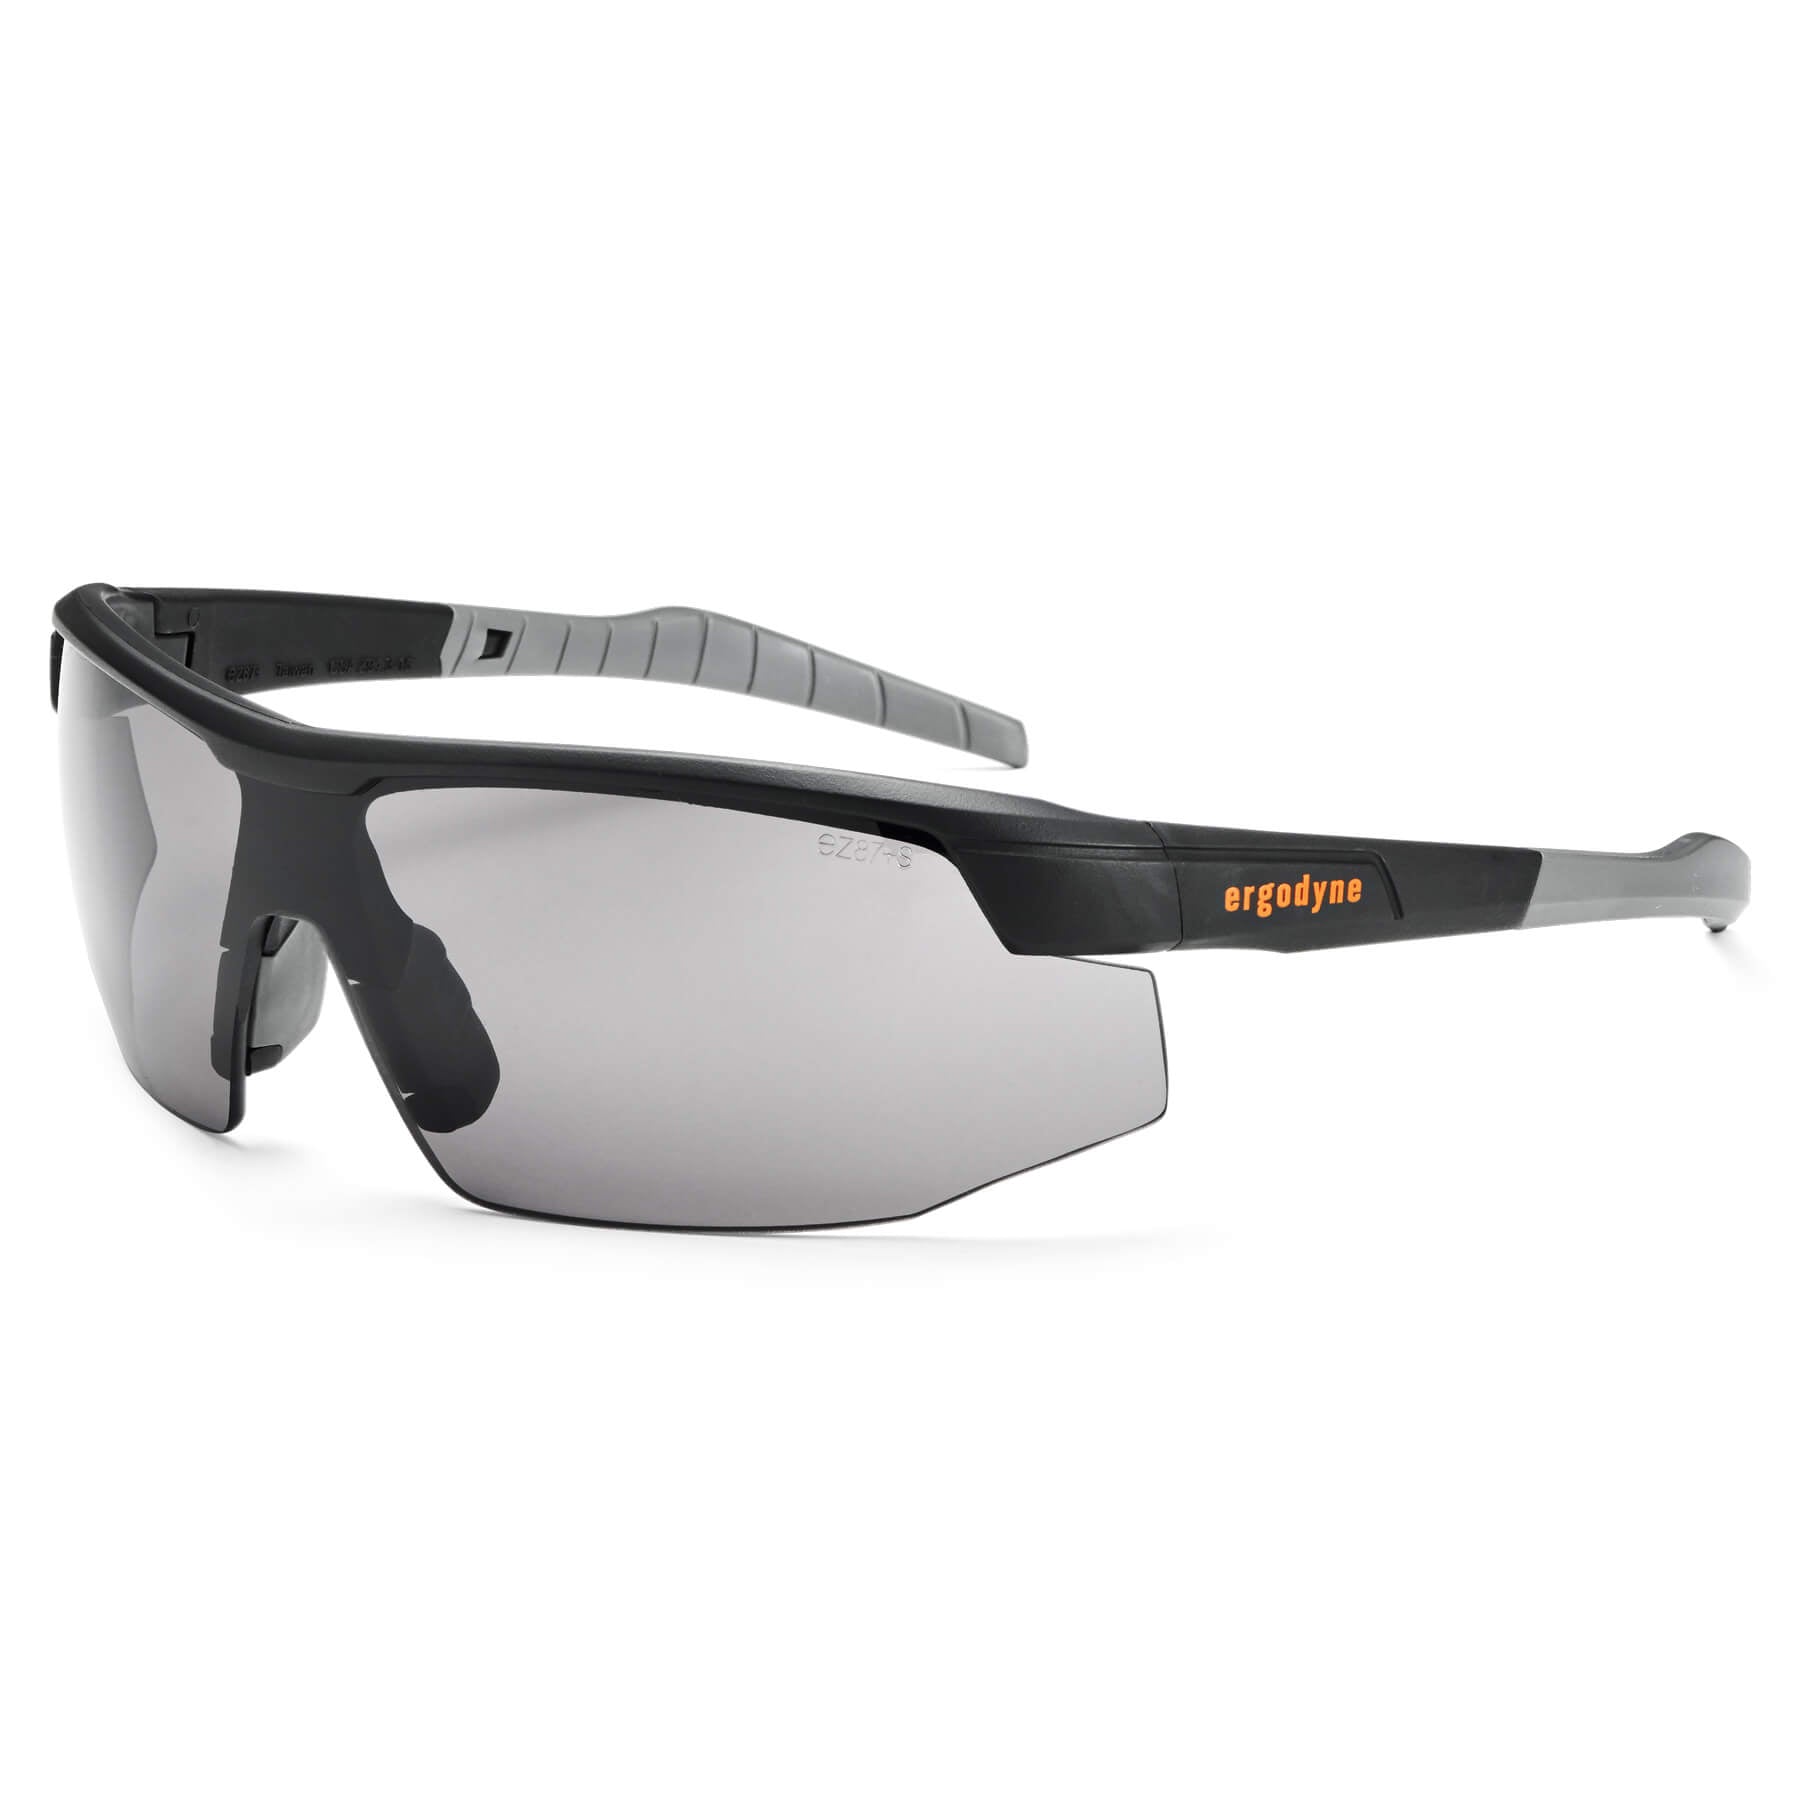 Skullerz® Sköll Safety Glasses // Sunglasses